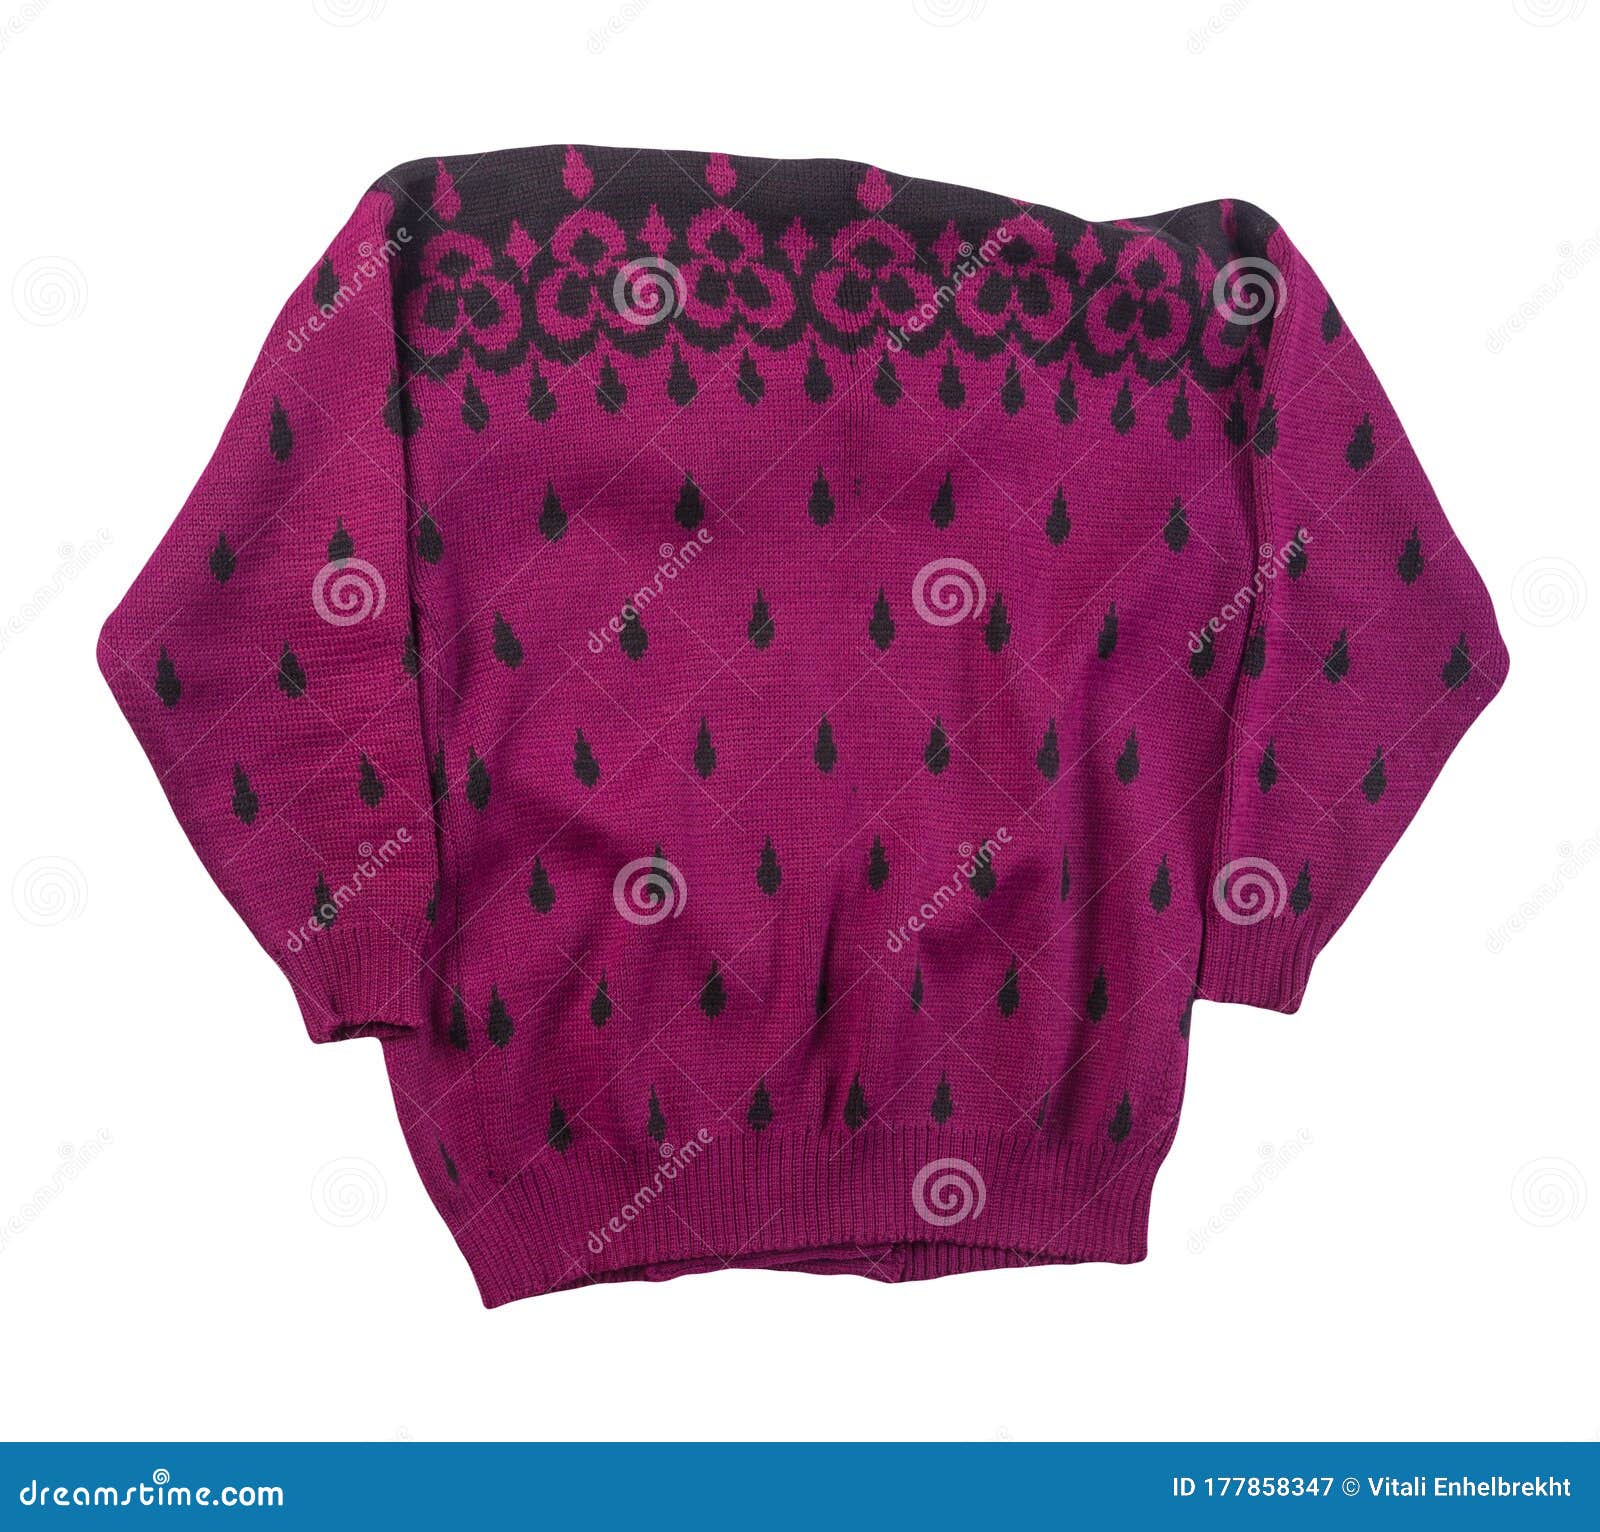 Female Knitted Sweater Isolated on White Background Stock Image - Image ...